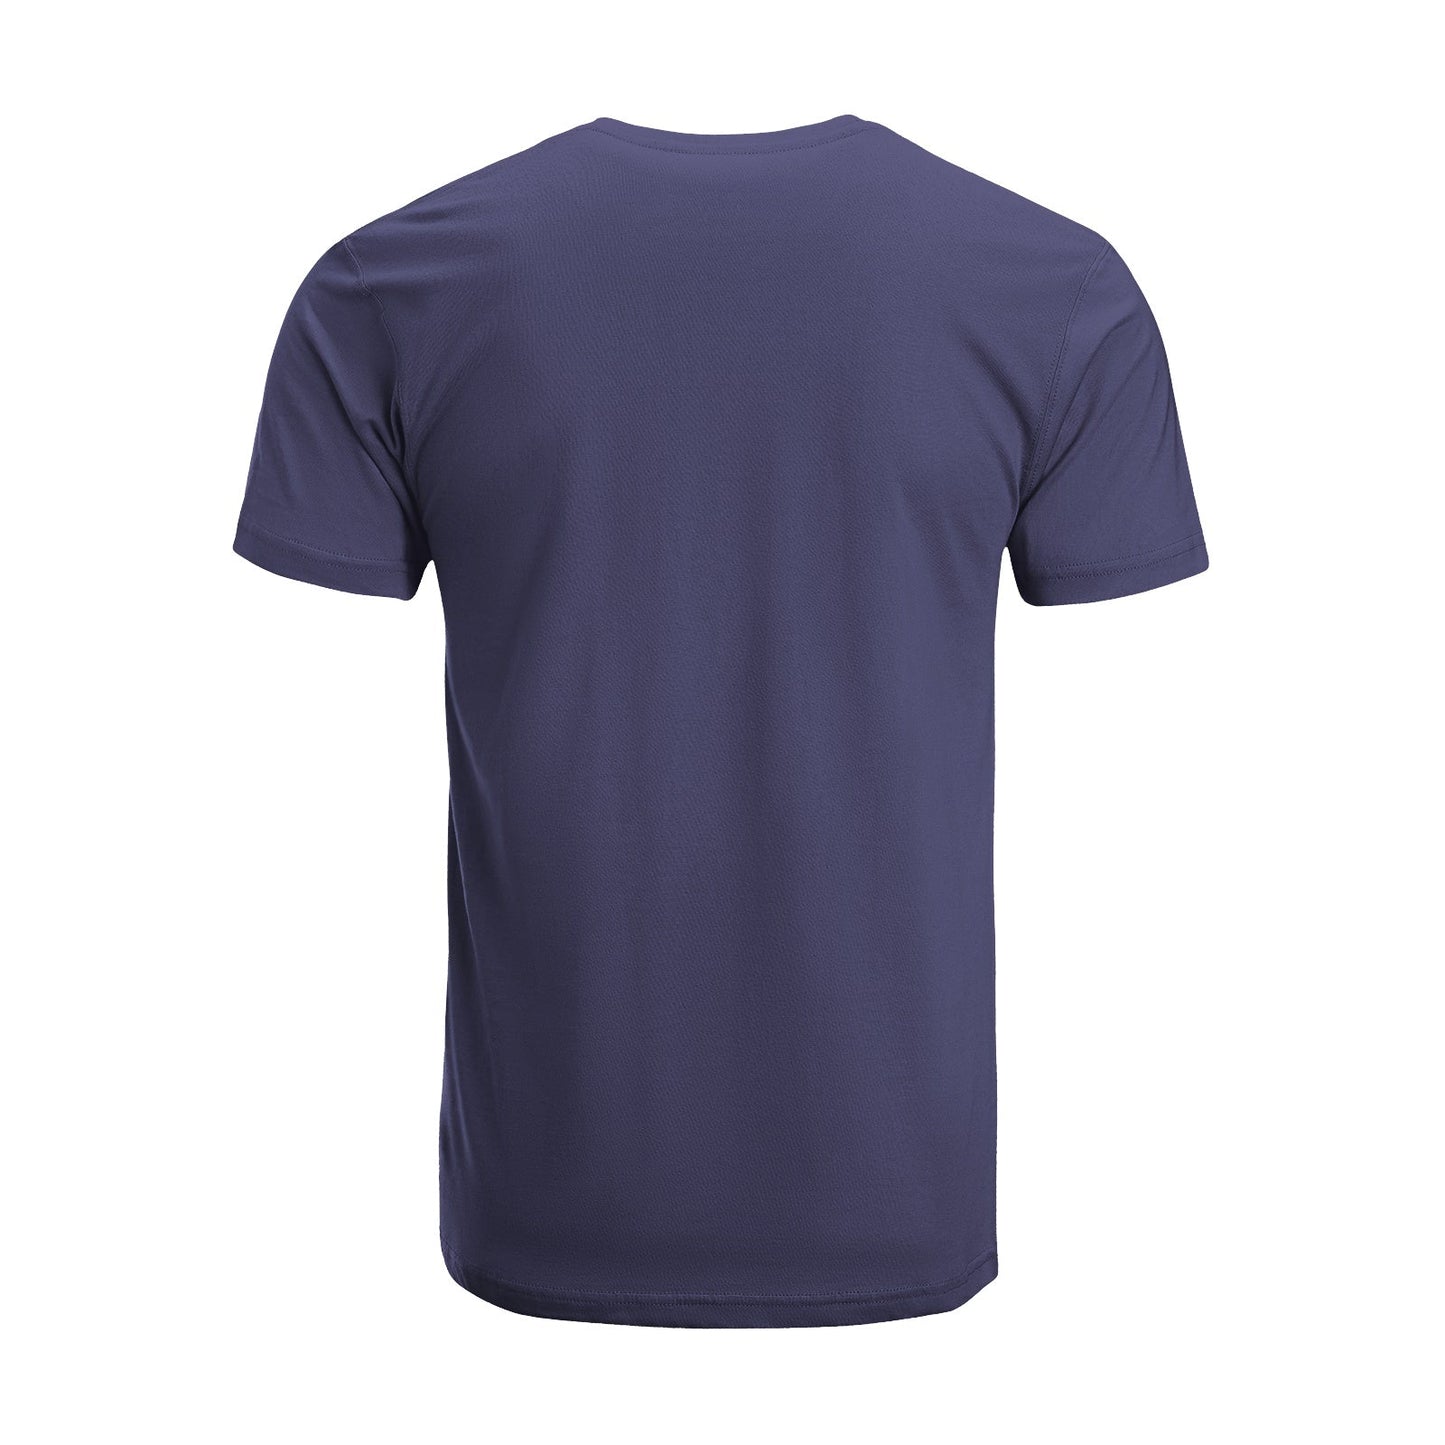 Unisex Short Sleeve Crew Neck Cotton Jersey T-Shirt MOM 25